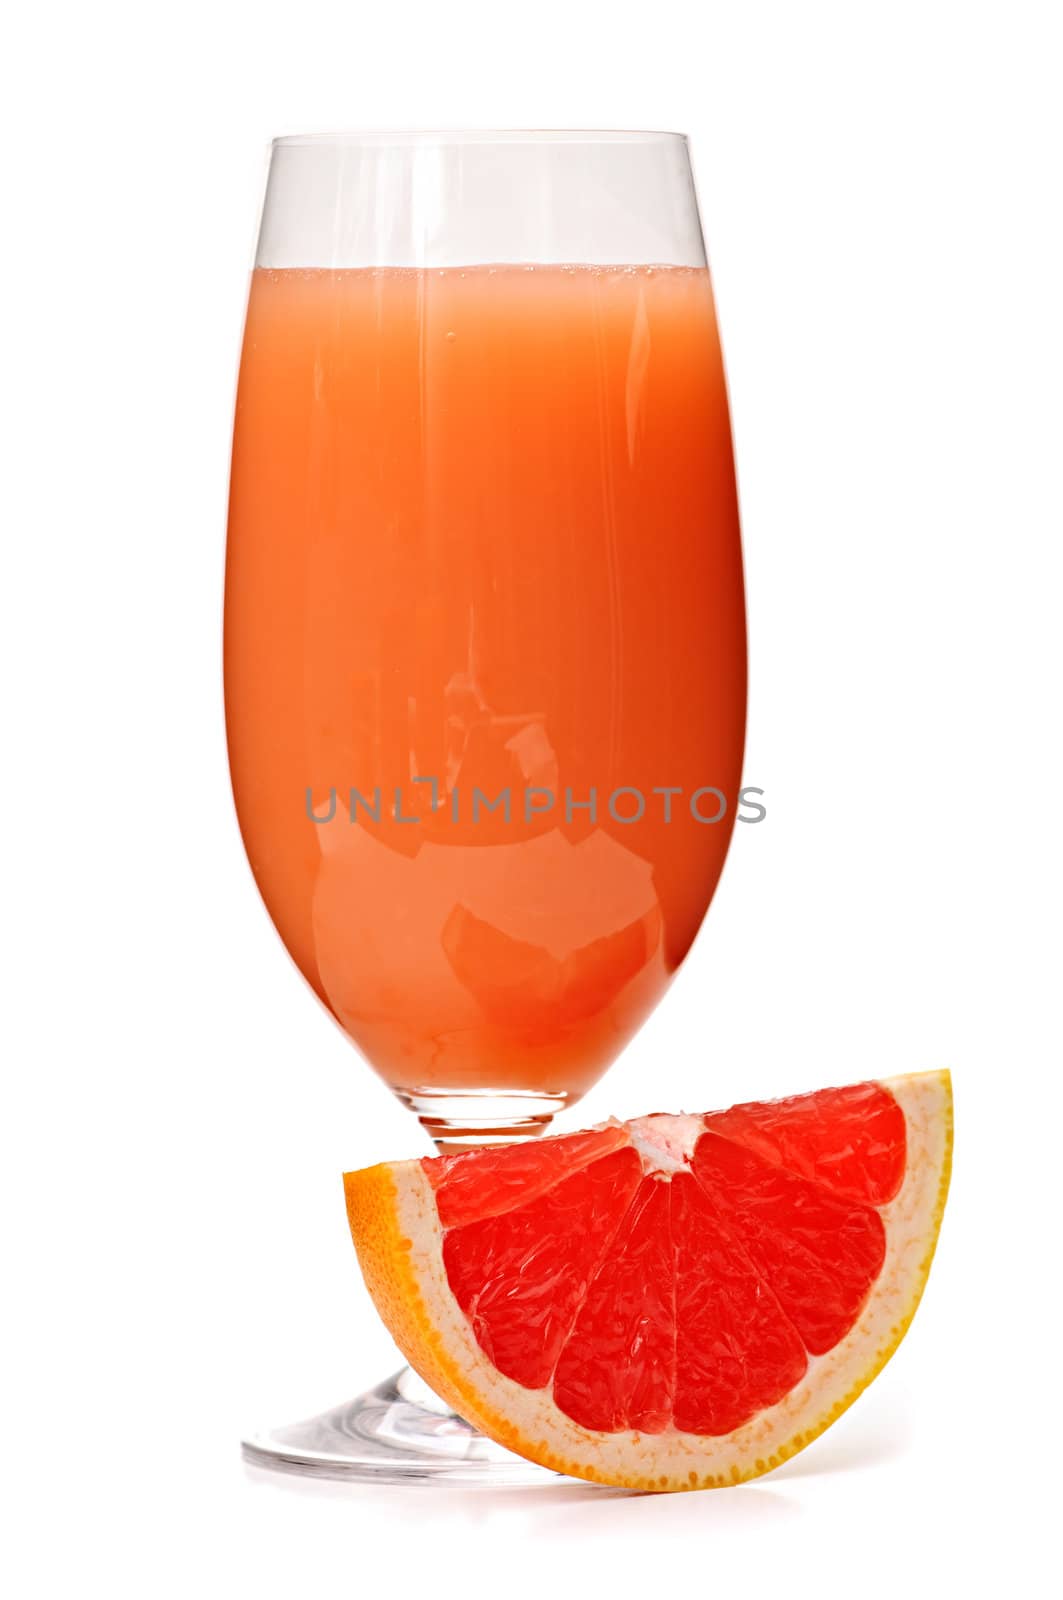 Grapefruit juice in glass by elenathewise